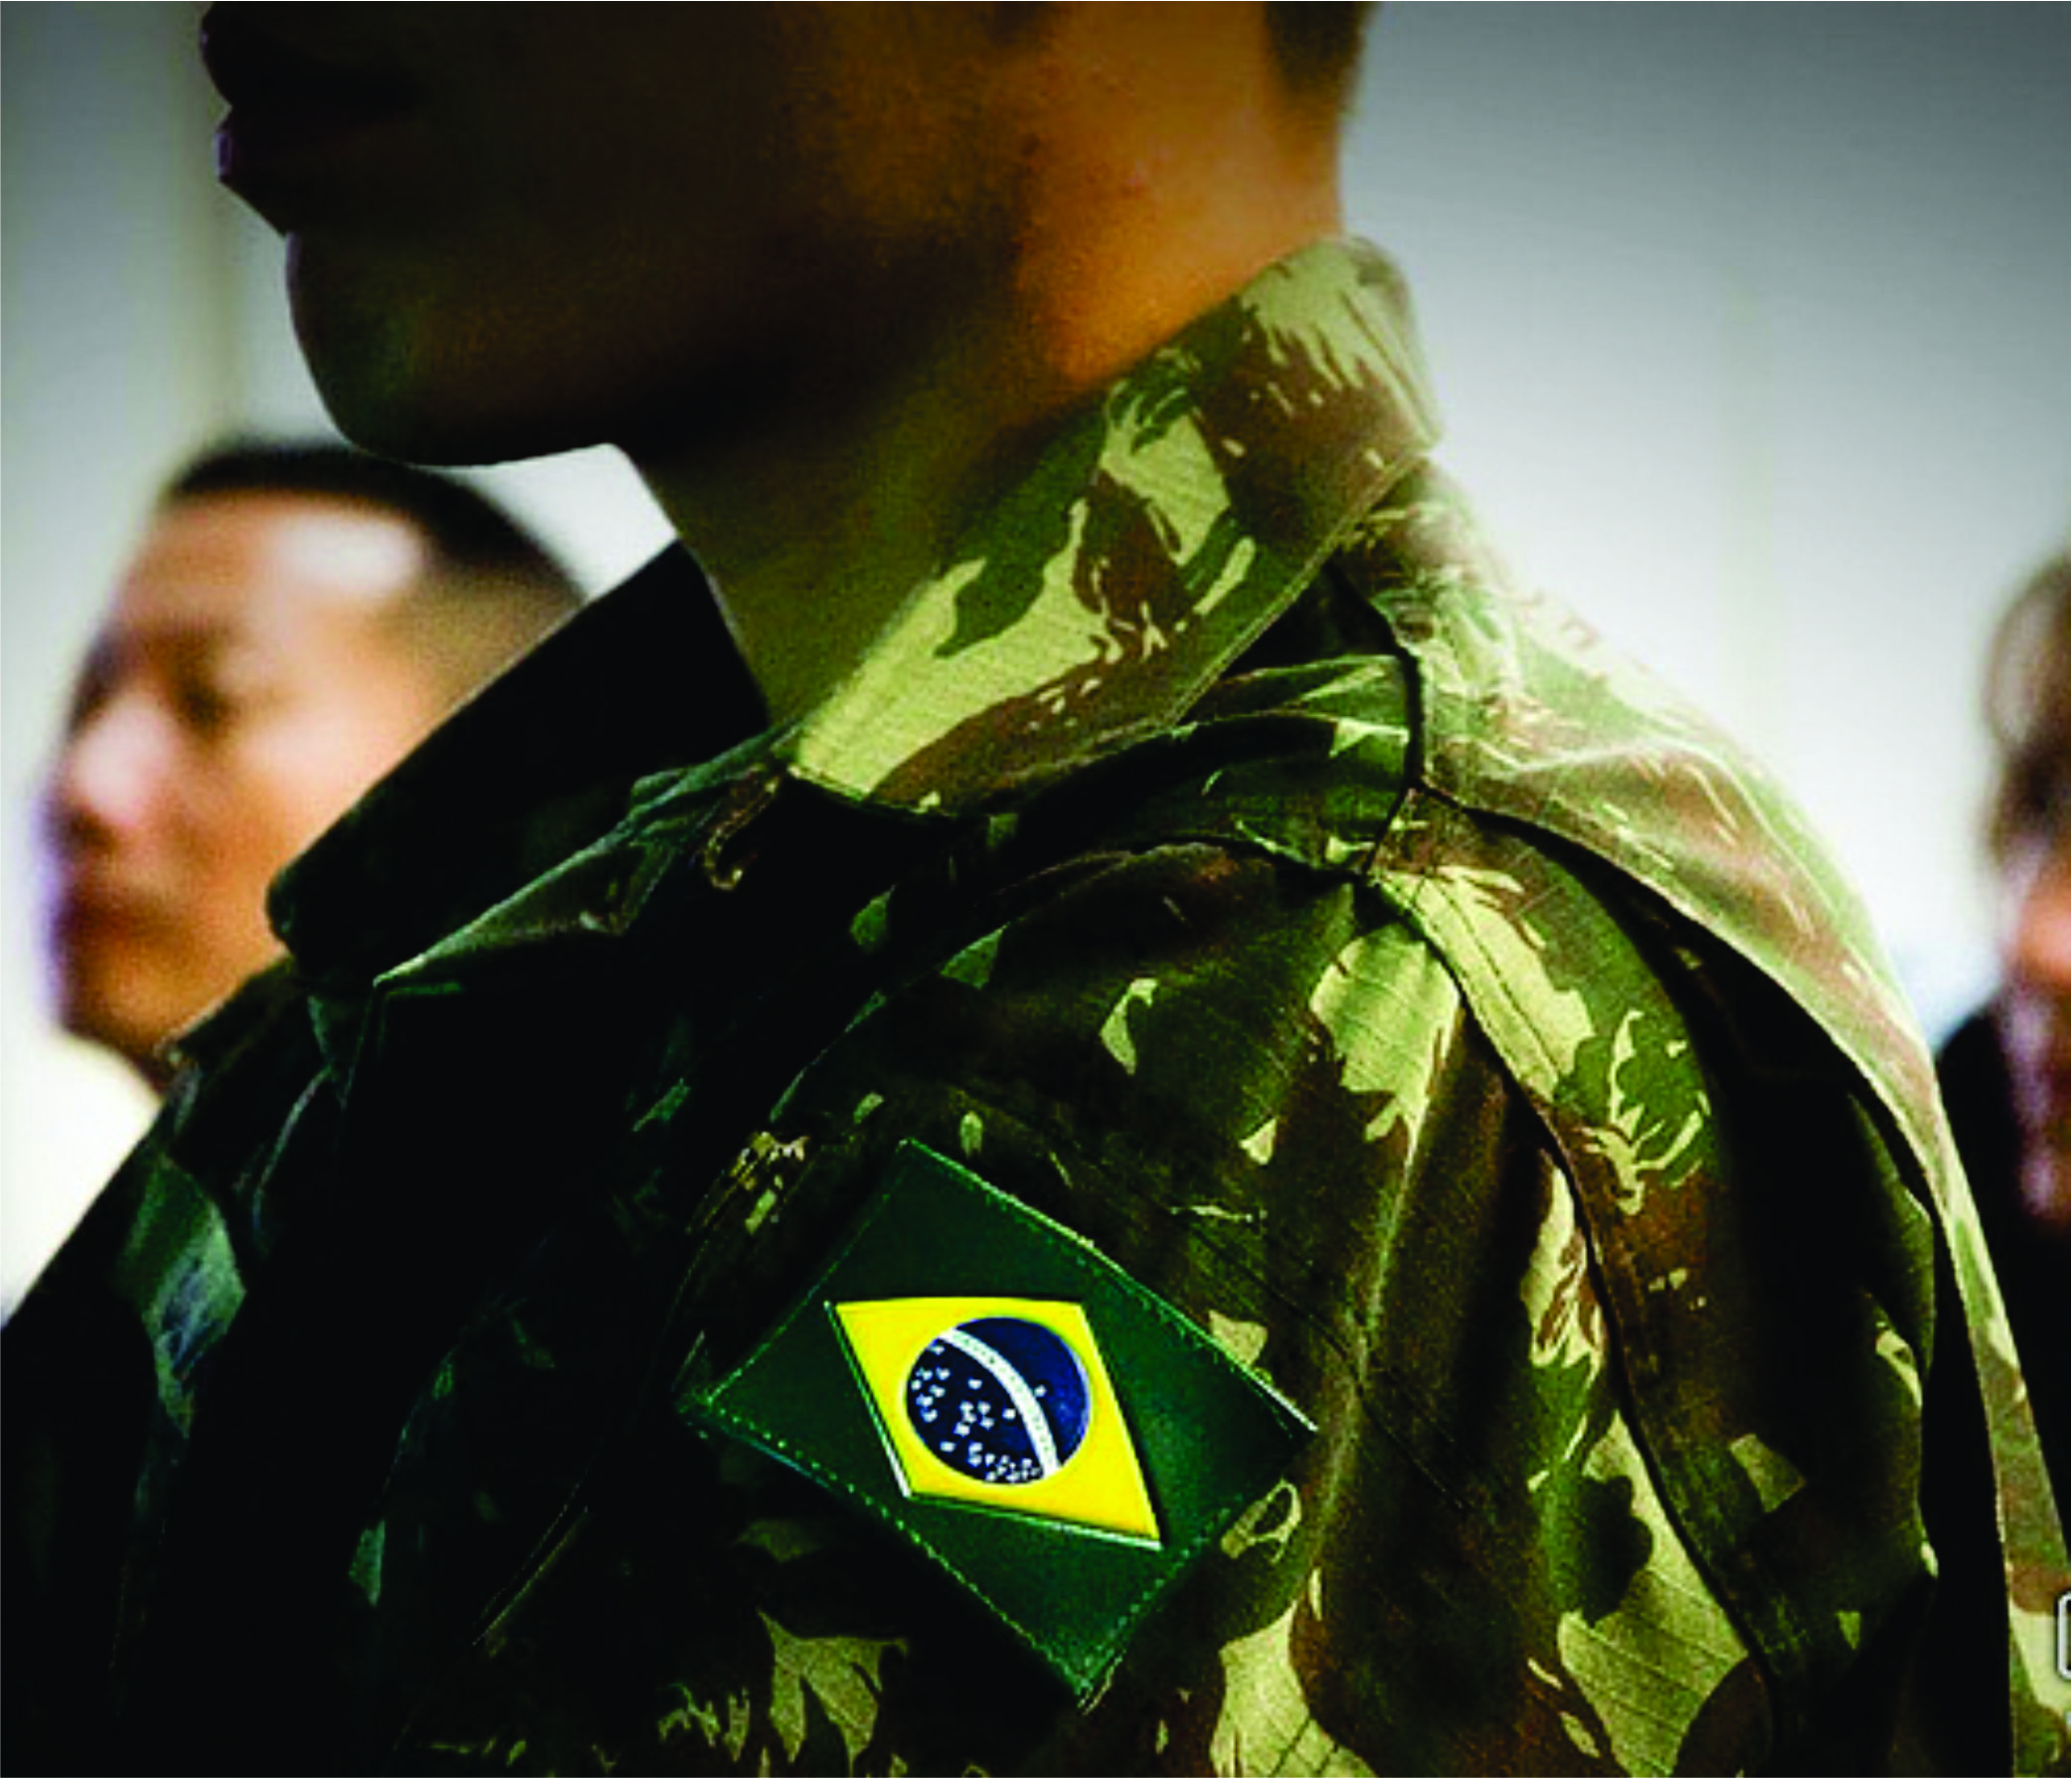 DECISÃO: Anulado o ato de licenciamento de cabo do Exército Brasileiro que estava a oito dias de garantir estabilidade